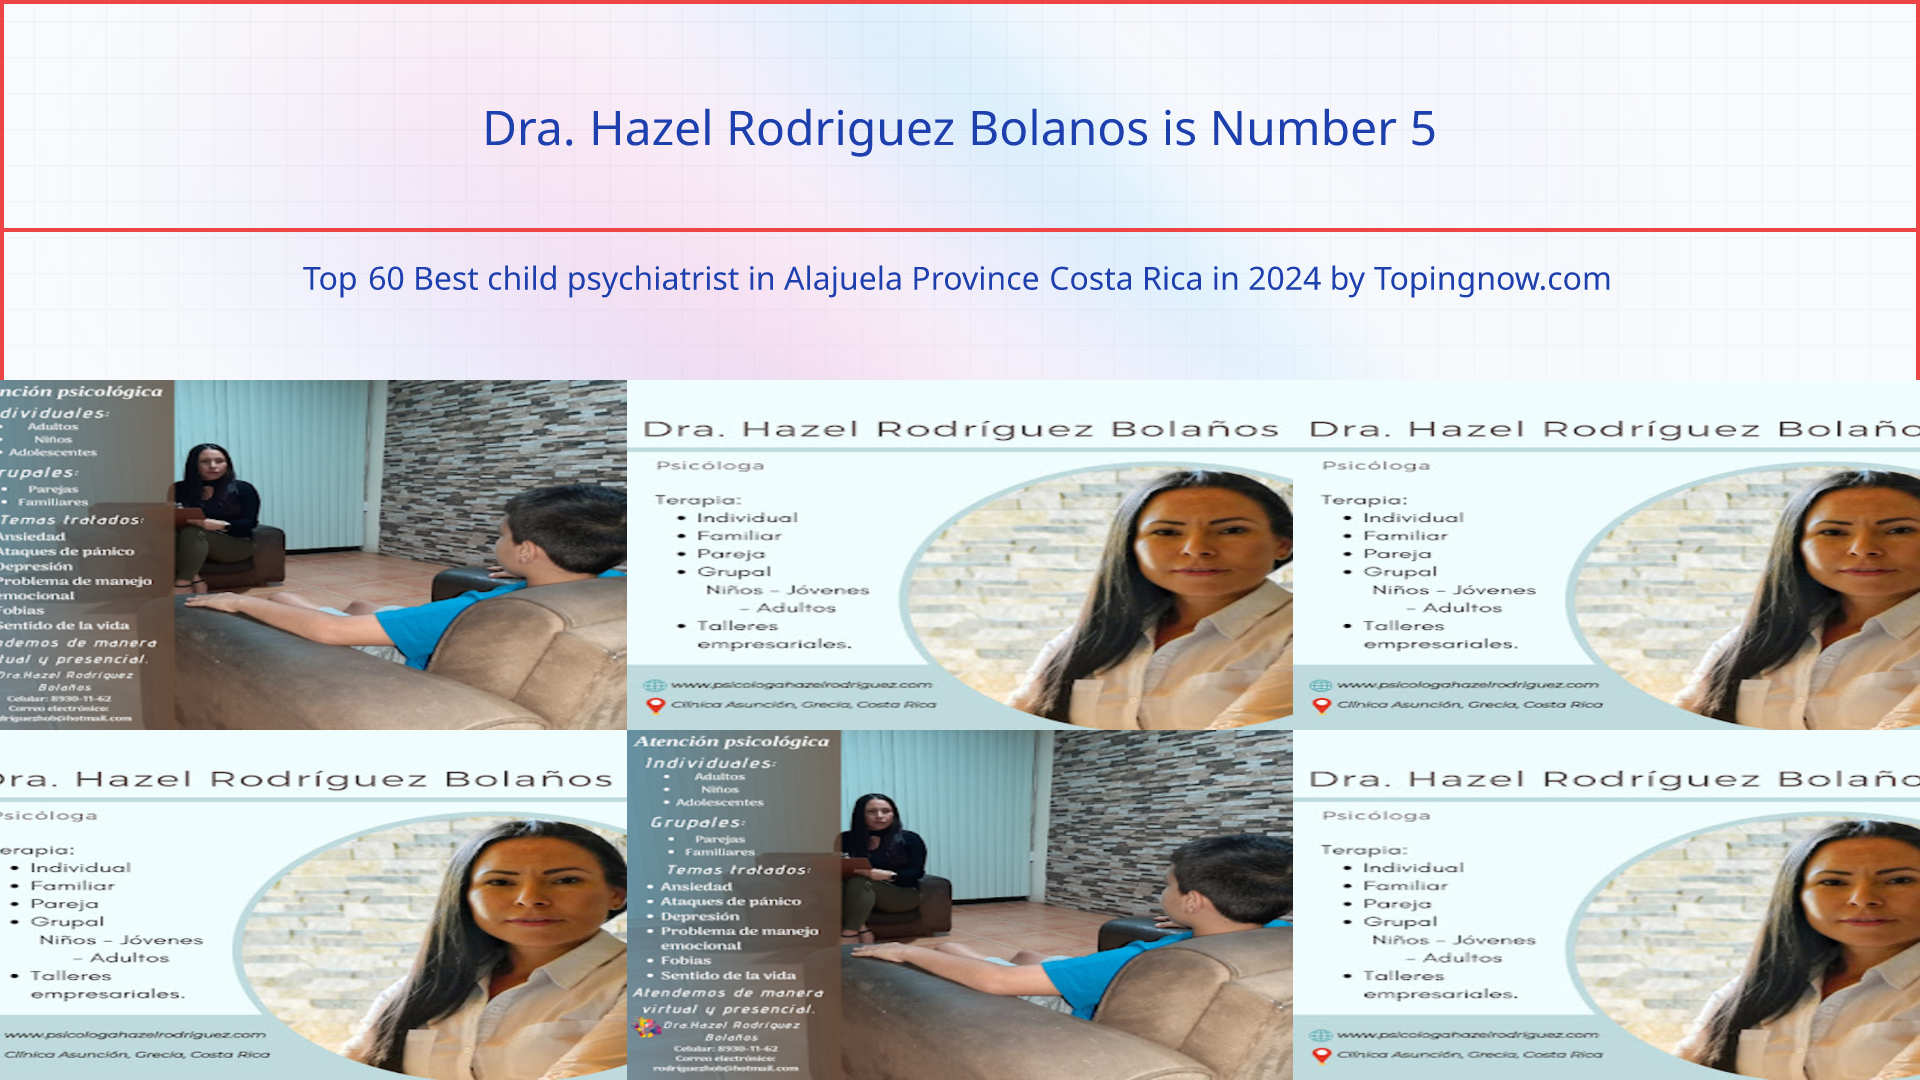 Dra. Hazel Rodriguez Bolanos: Top 60 Best child psychiatrist in Alajuela Province Costa Rica in 2024